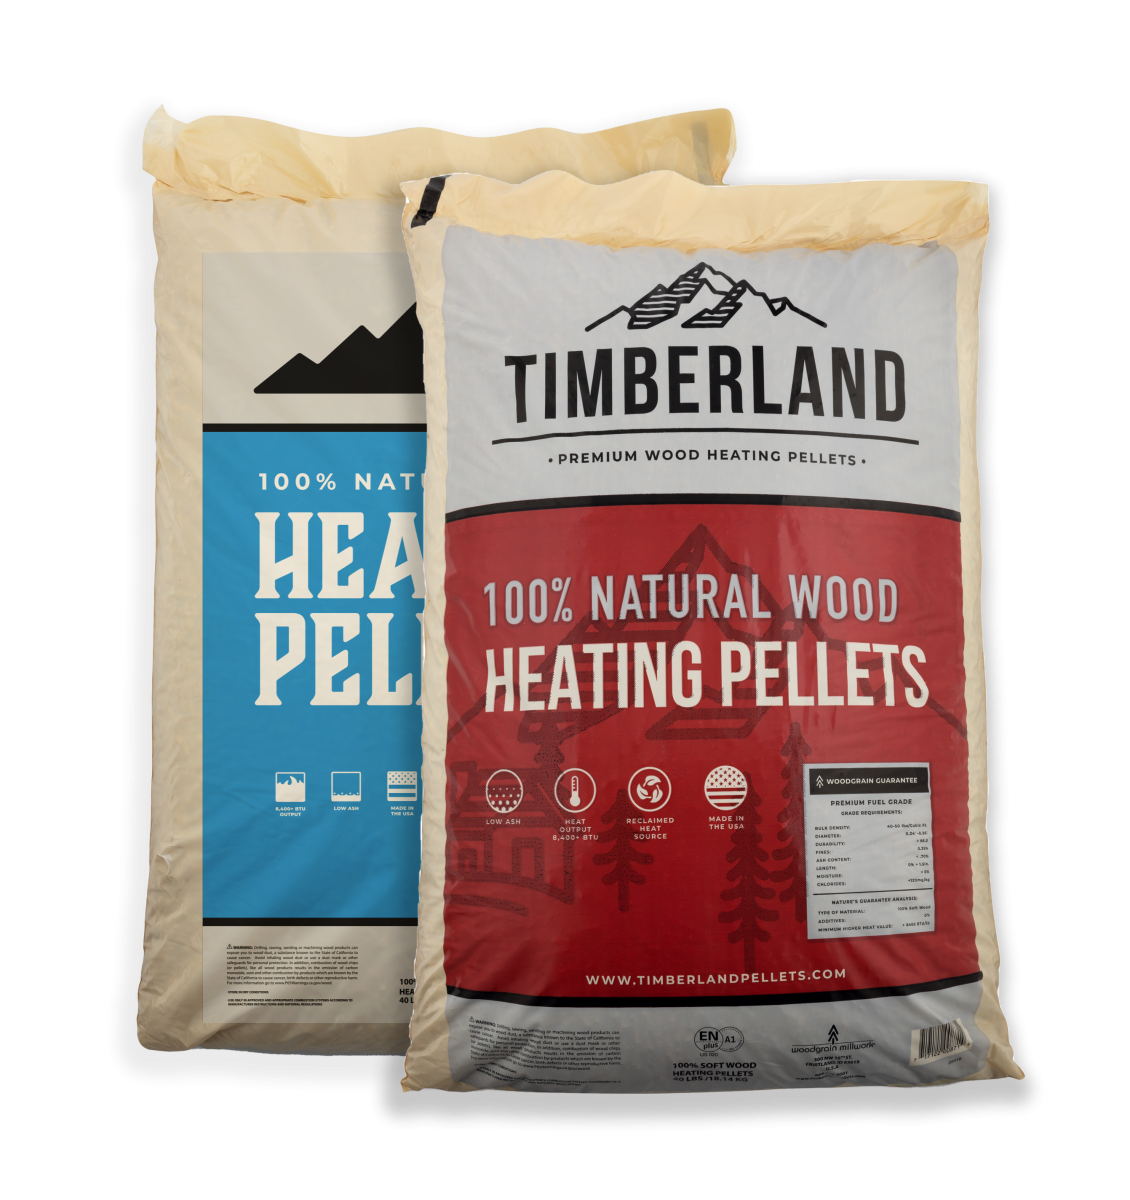 Timberland Heating Pellets, Wood Heating Pellets